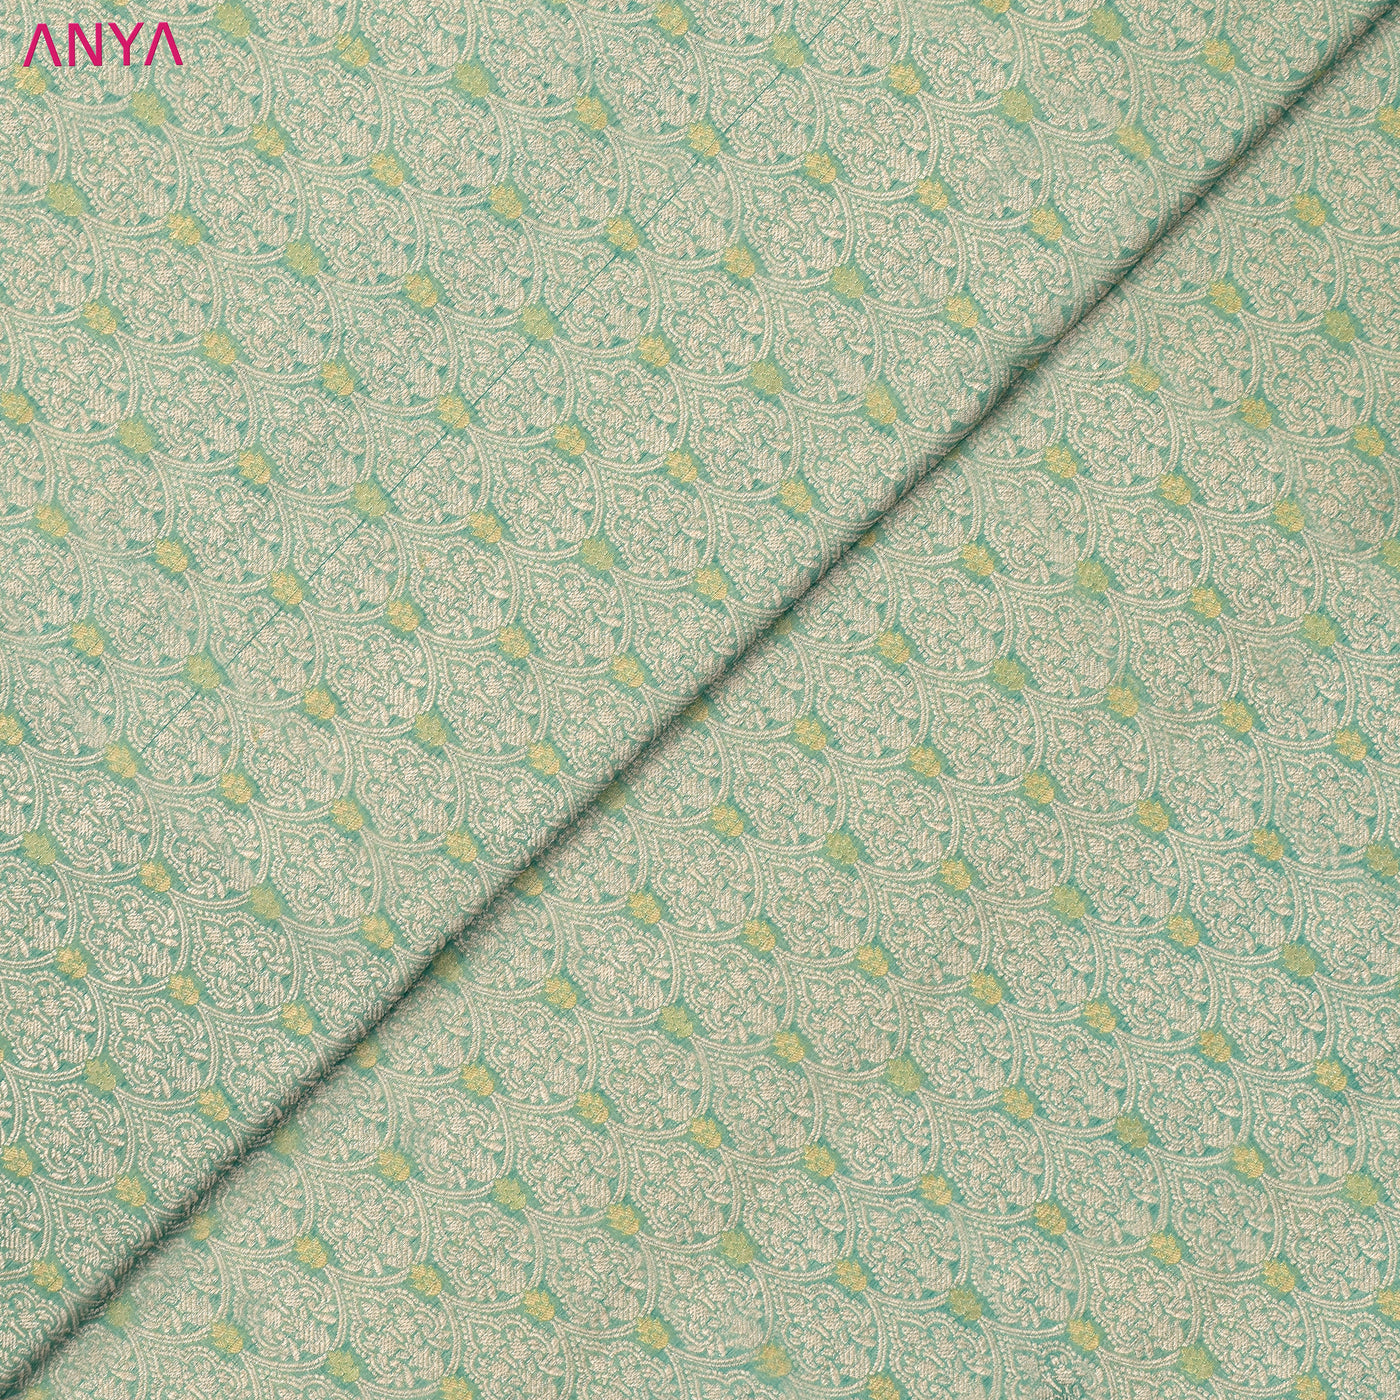 Olive Green Banarasi Silk Fabric with Creeper Design